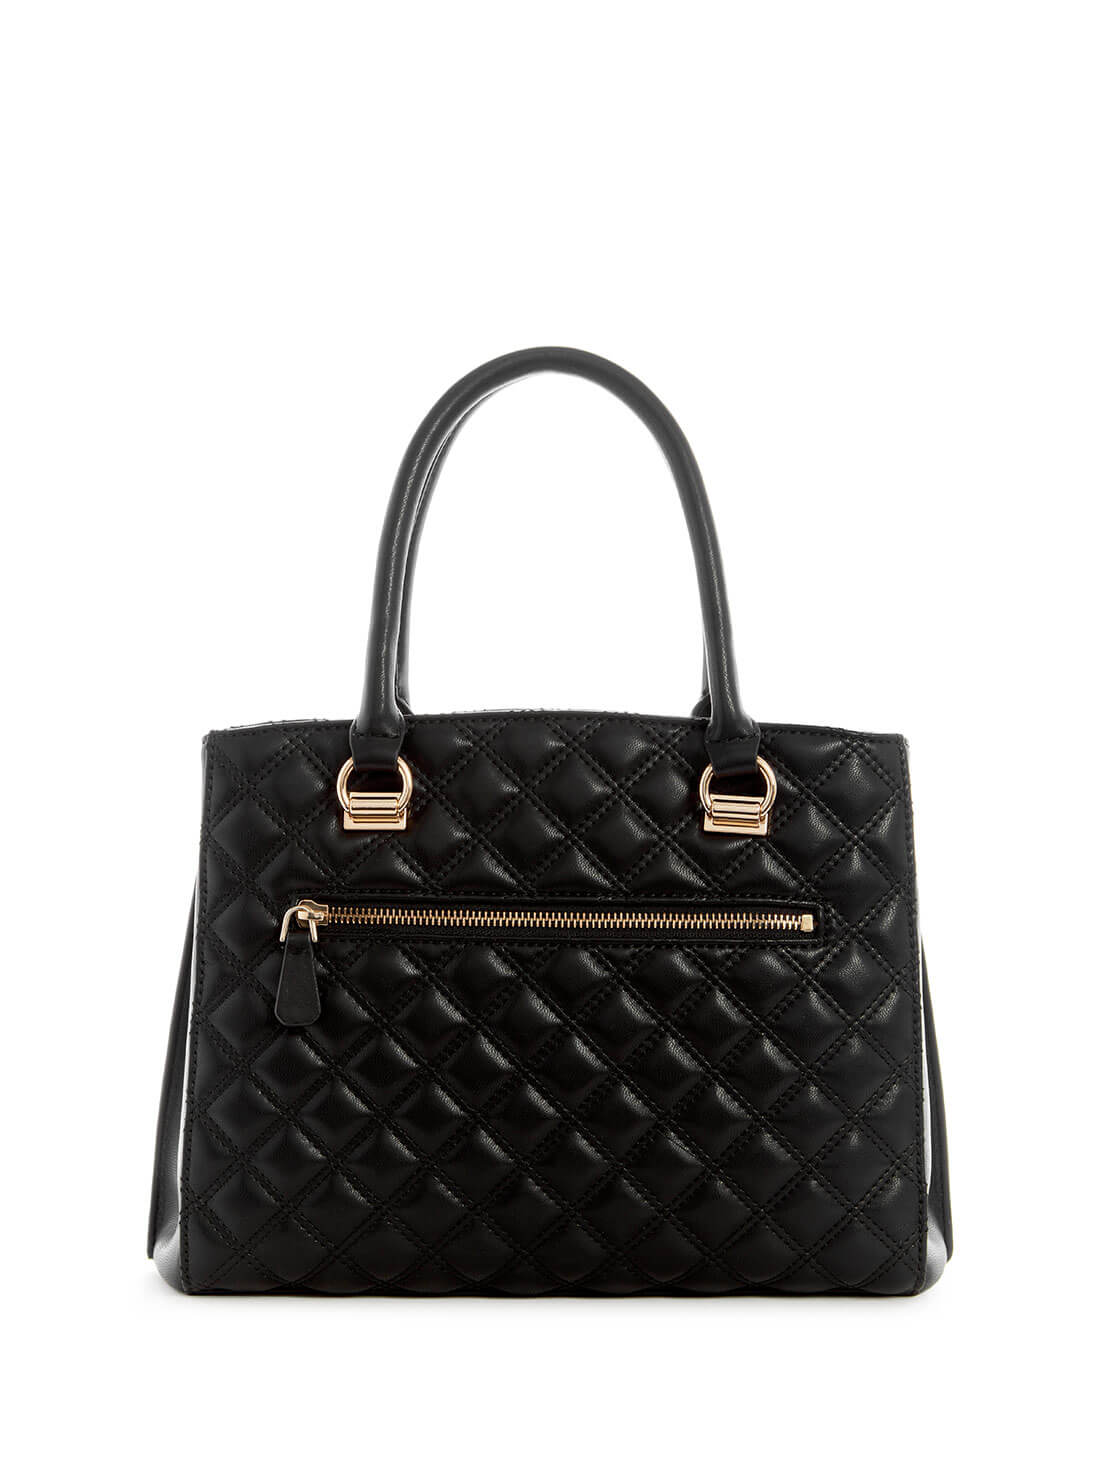 Black Girlfriend Satchel Bag | GUESS Women's Handbags | back view